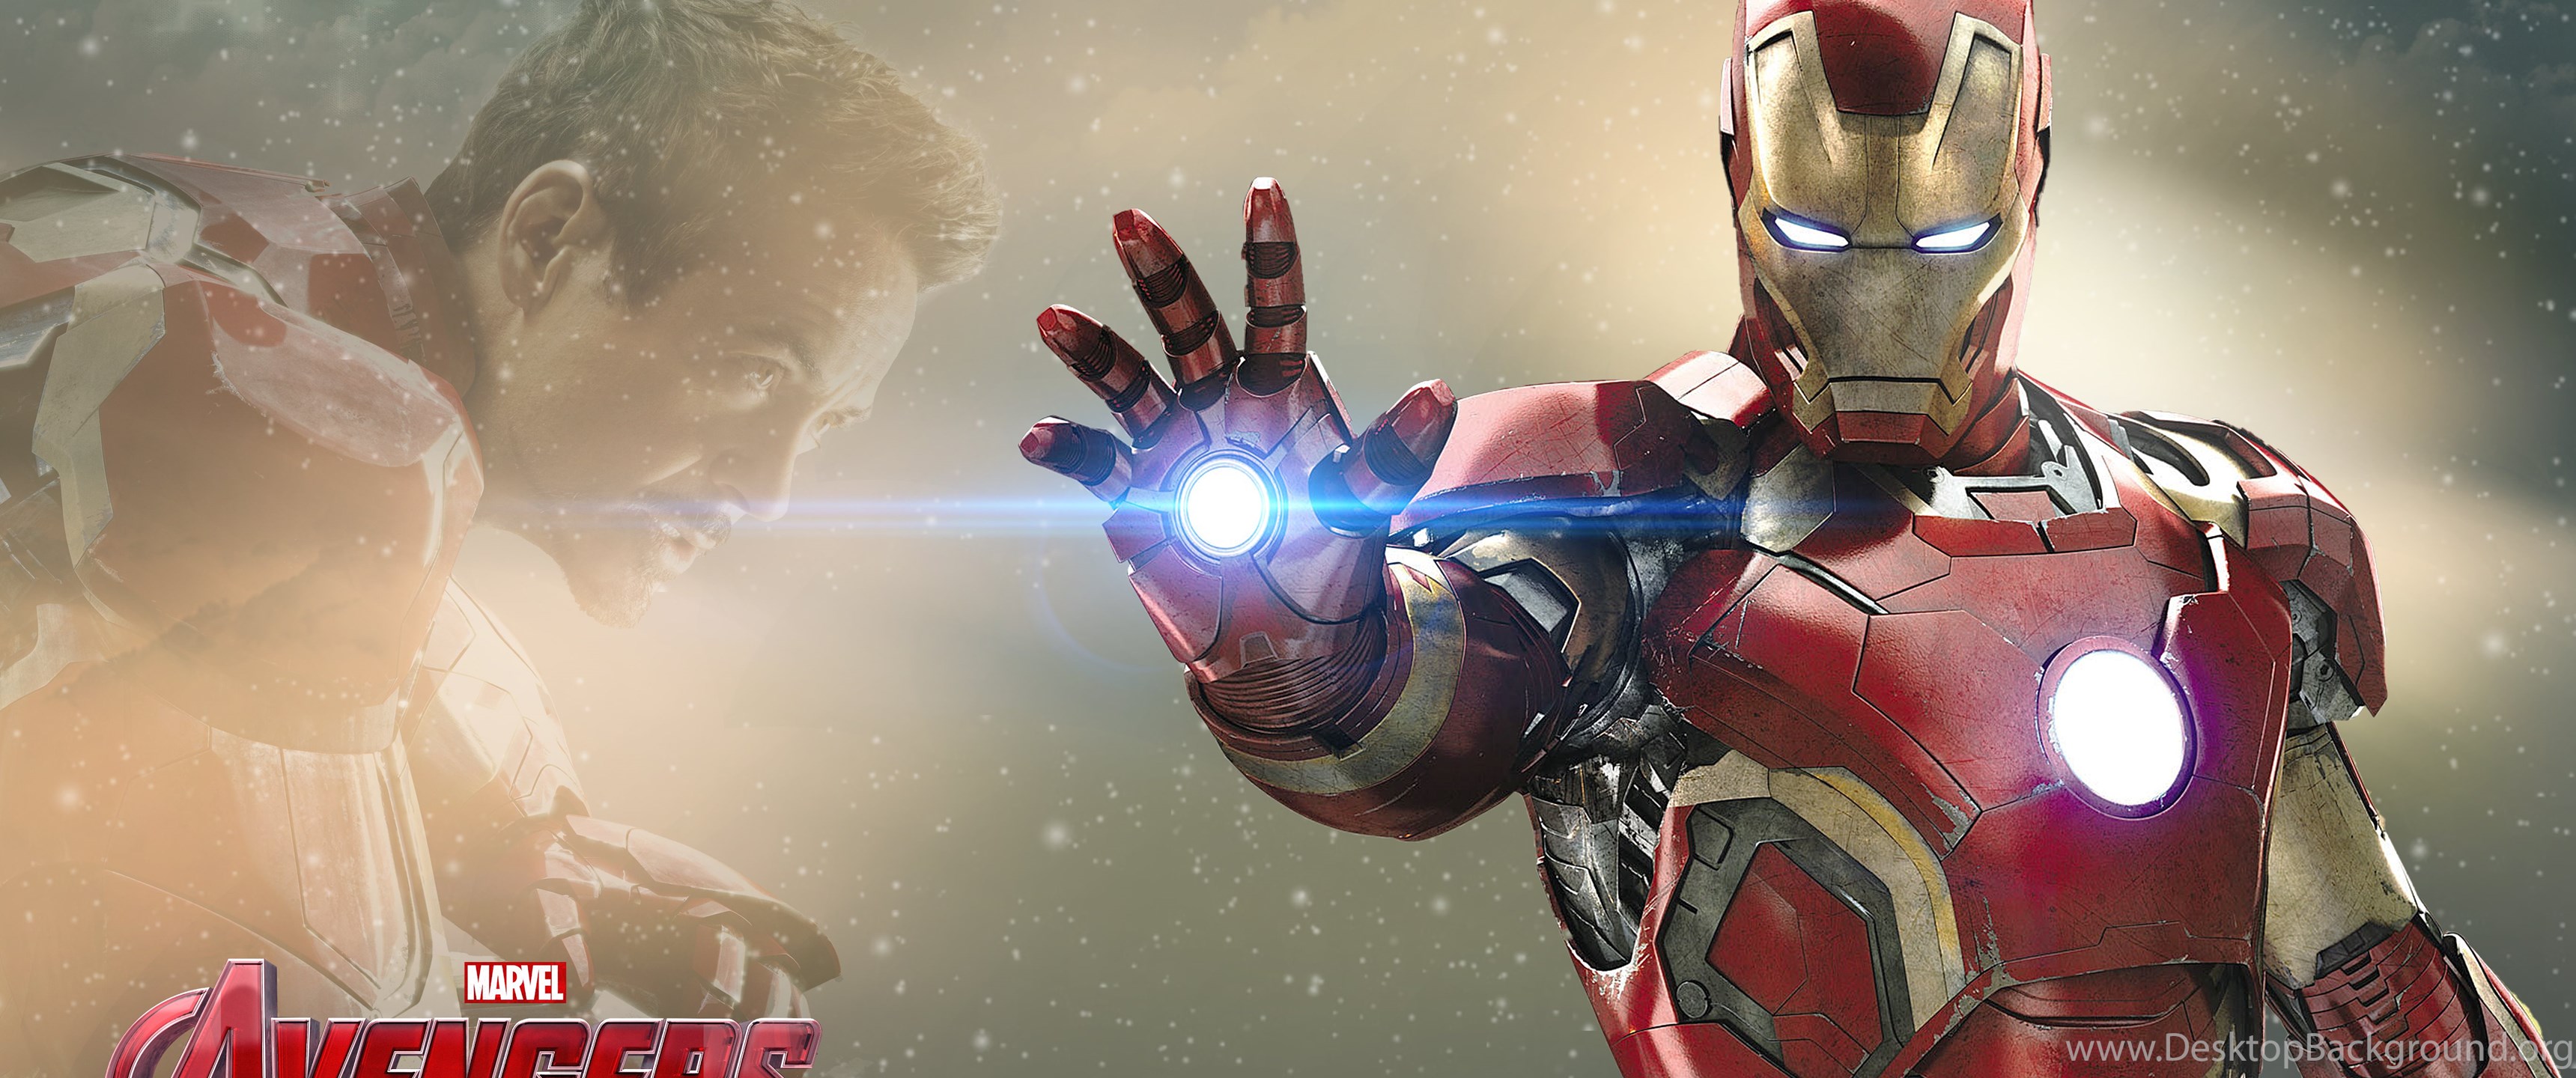 Iron Man Avengers Wallpapers Uncalke.com Desktop Background